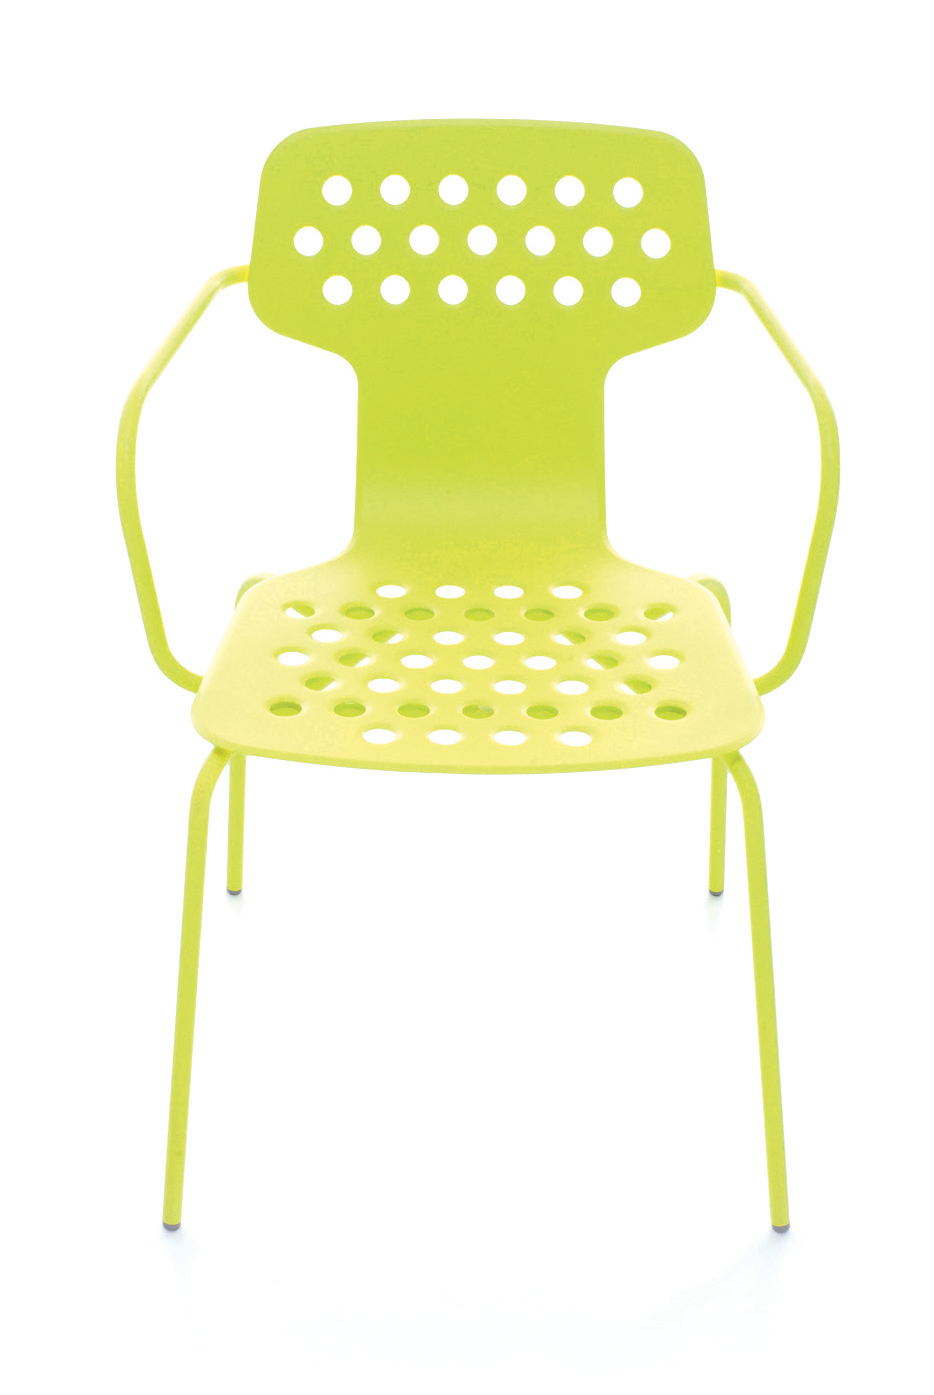 Open Chair, design di James Irvine per Alias, 2007.